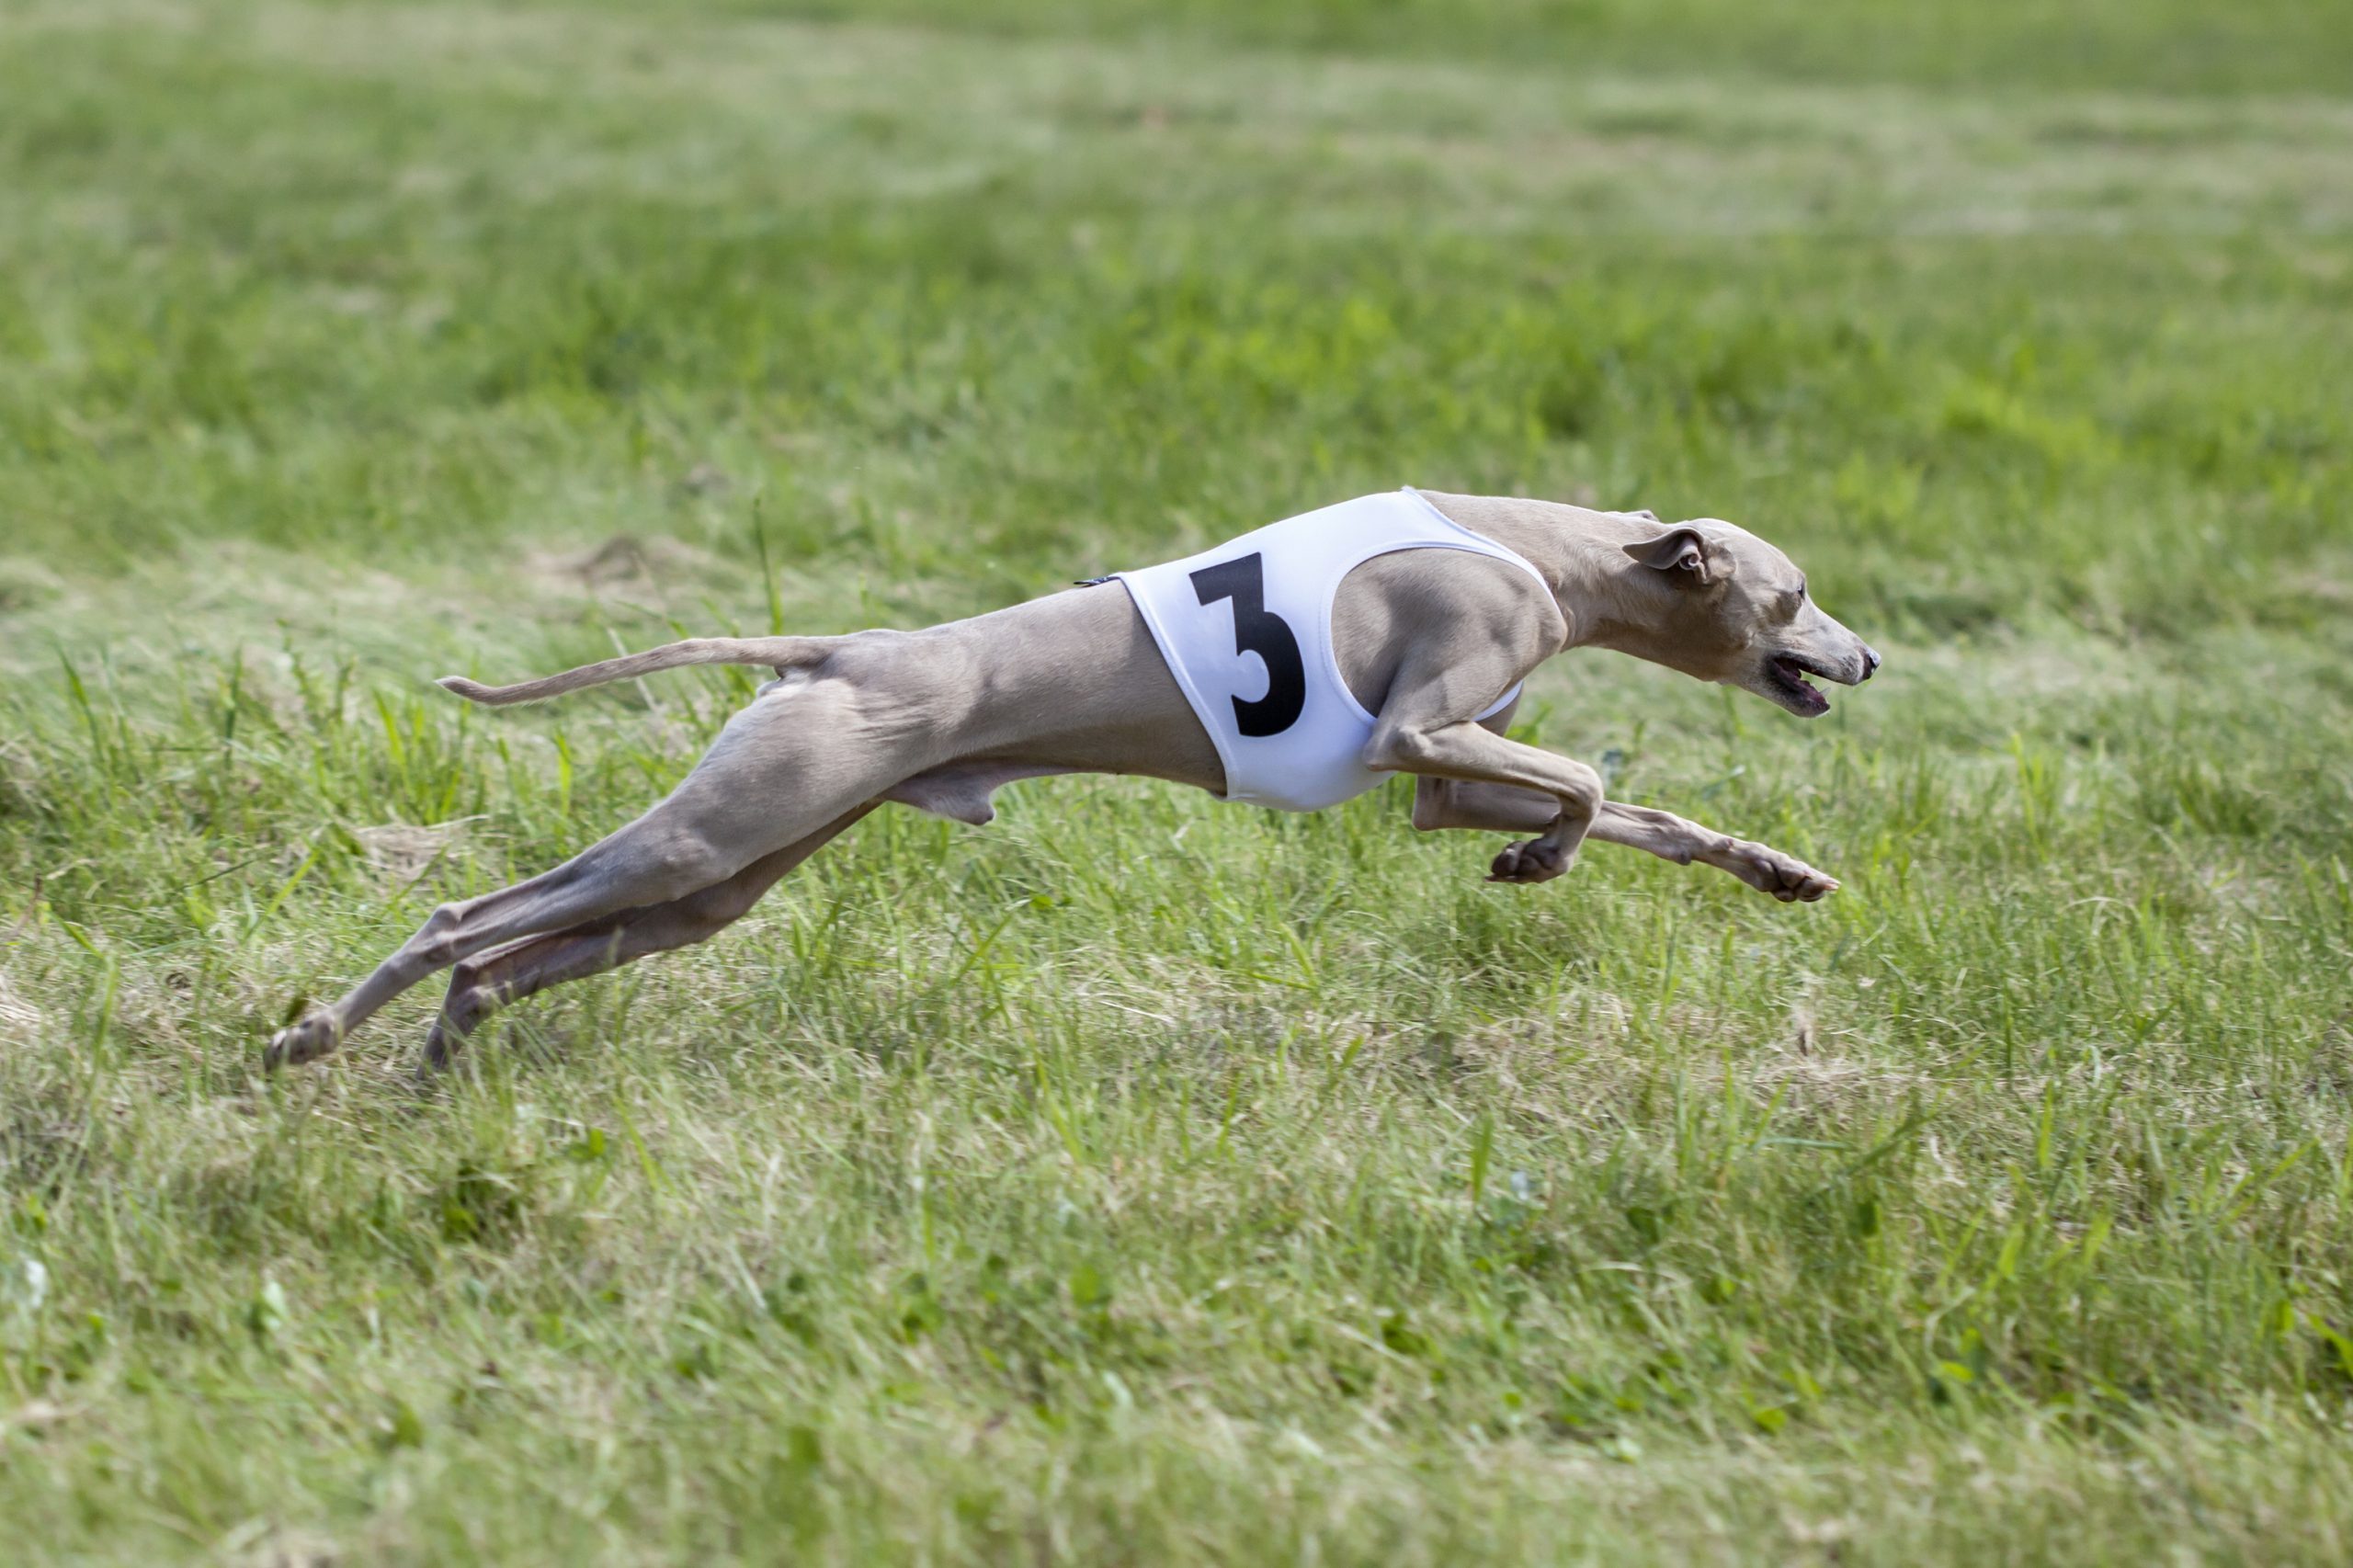 Greyhound coursing